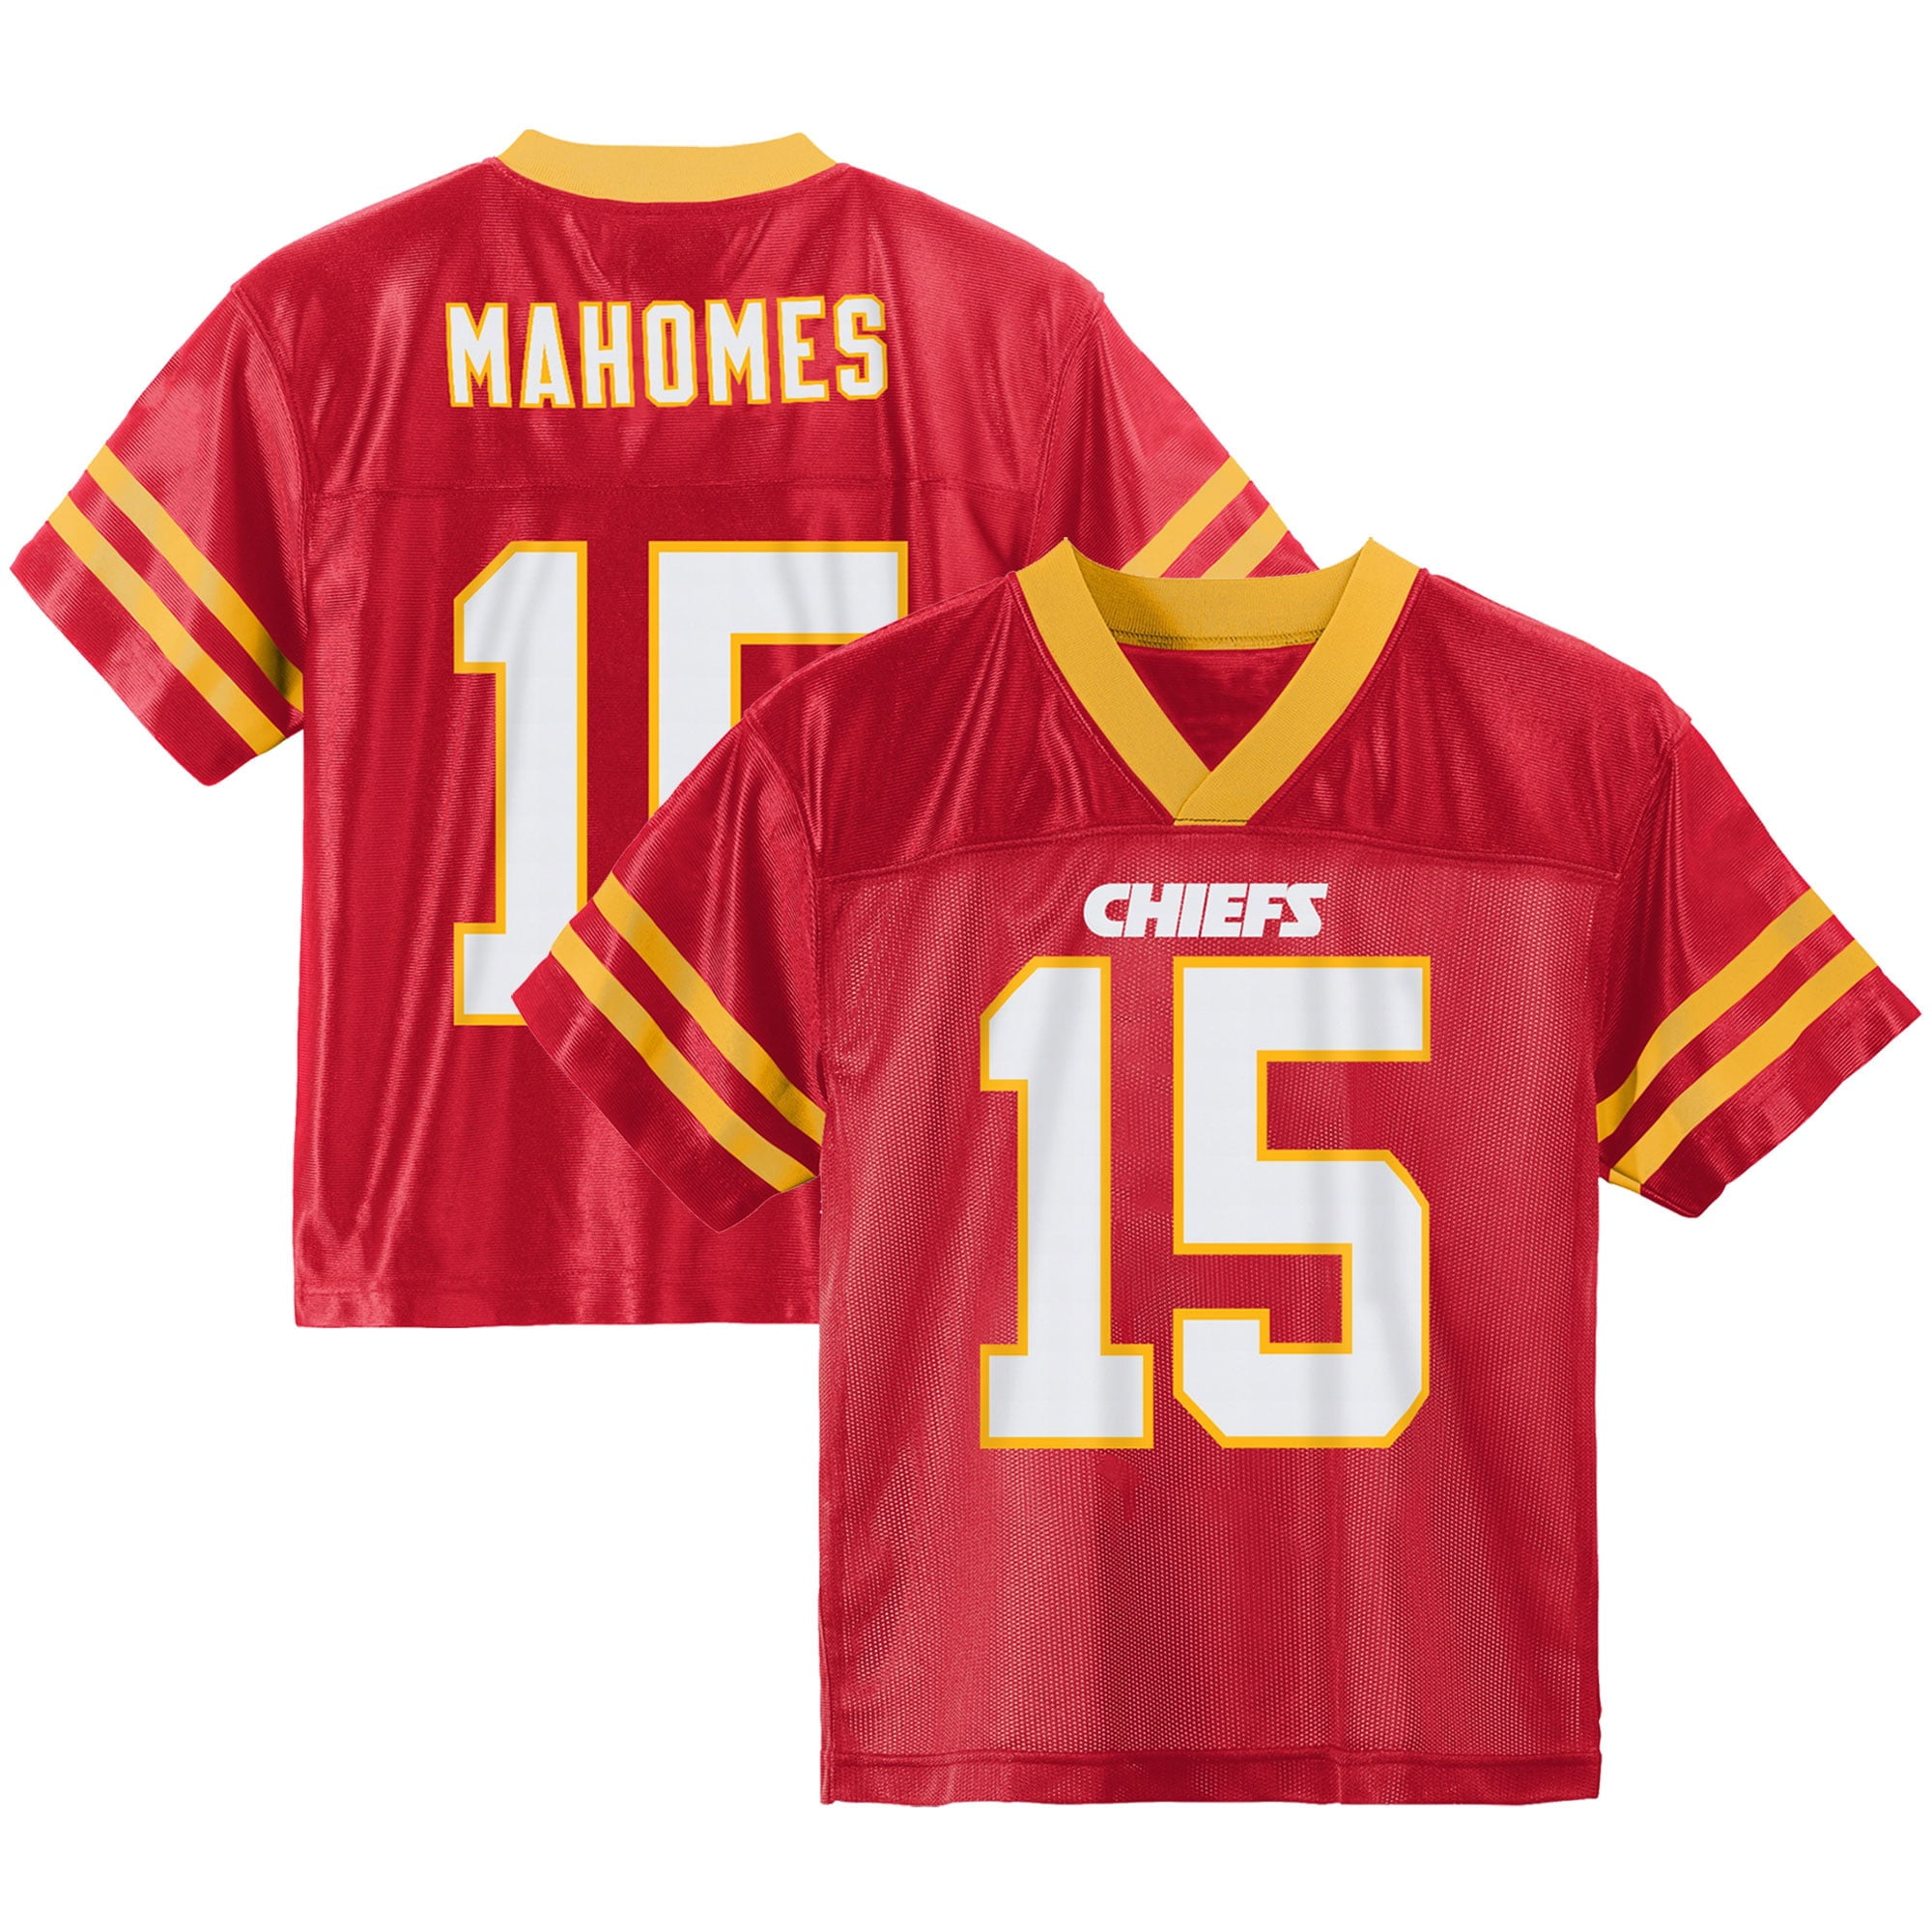 chiefs 16 jersey